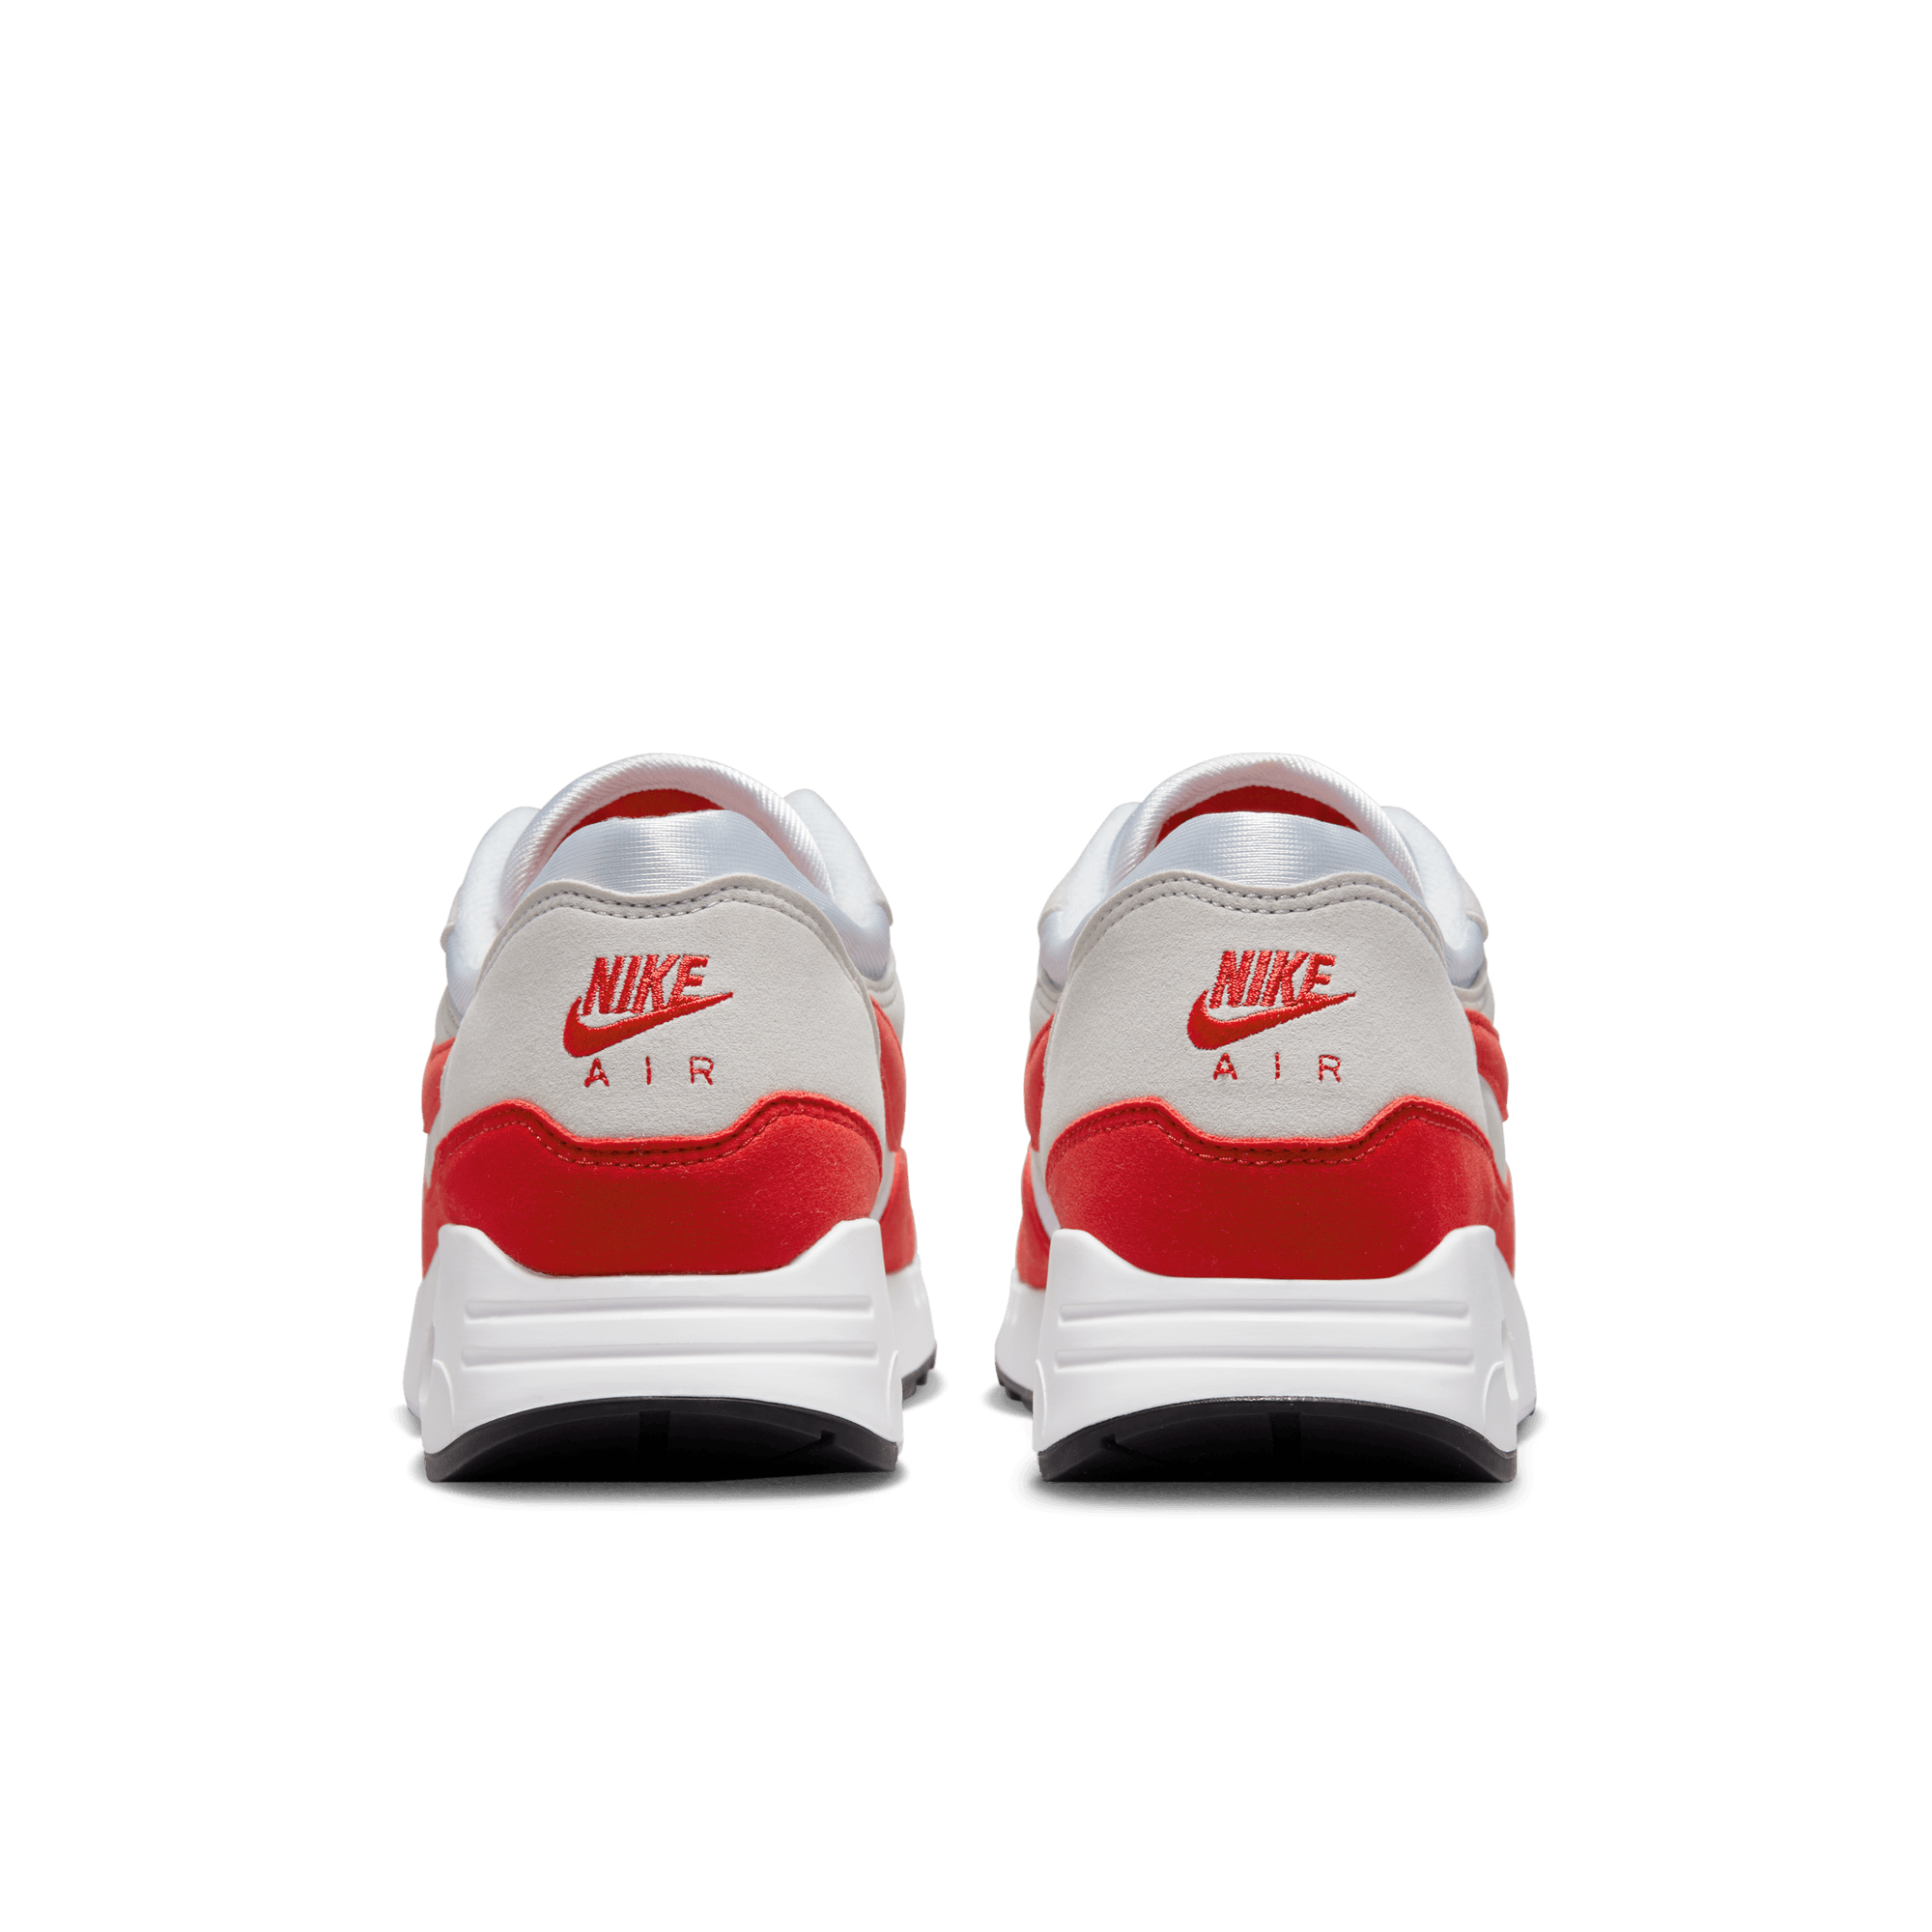 NIKE FOOTWEAR Nike Air Max 1 '86 "Big Bubble Sport Red" - Men's